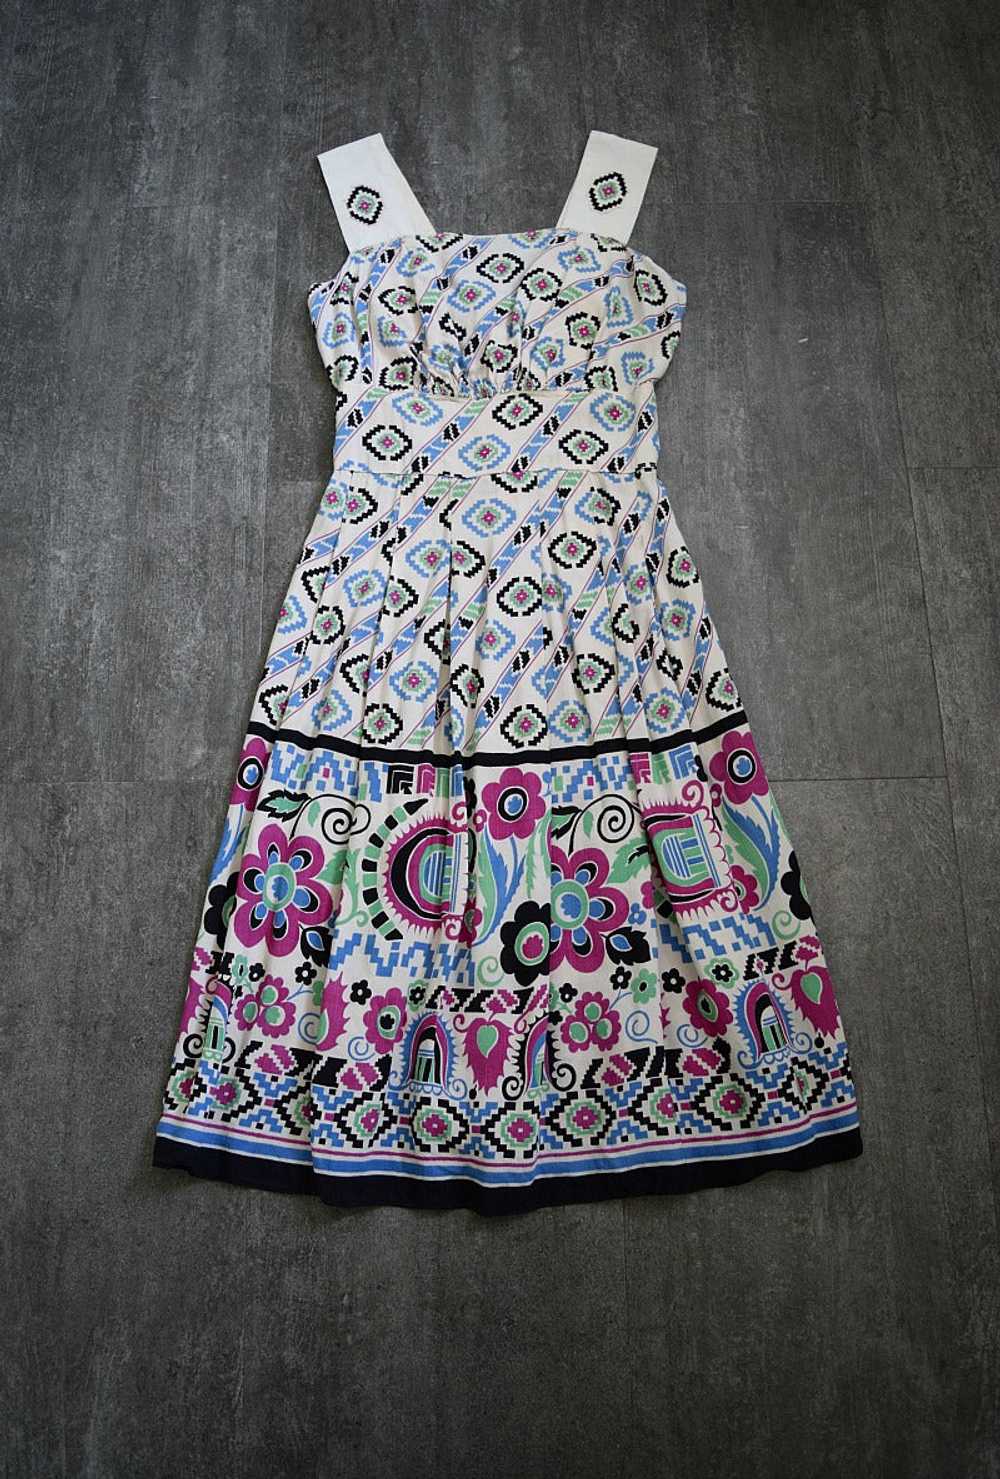 1940s sundress . vintage 40s geometric print dress - image 2